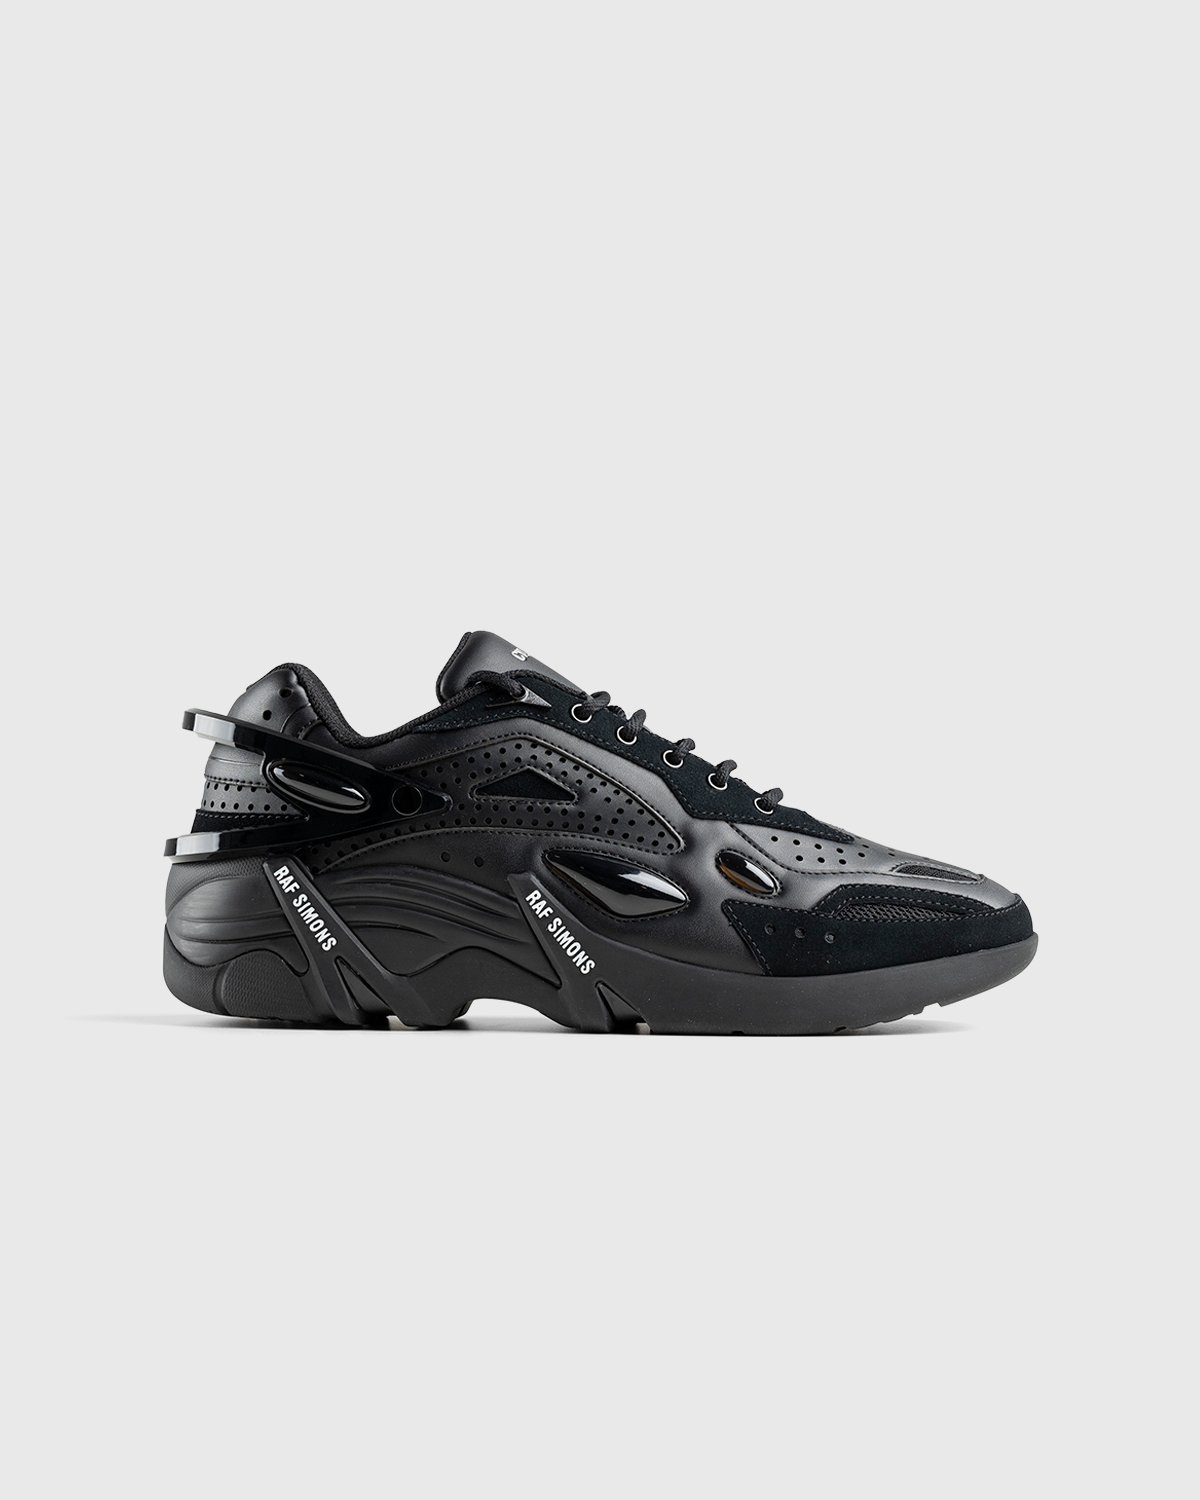 Raf Simons – Cylon 21 Black - Sneakers - Black - Image 1